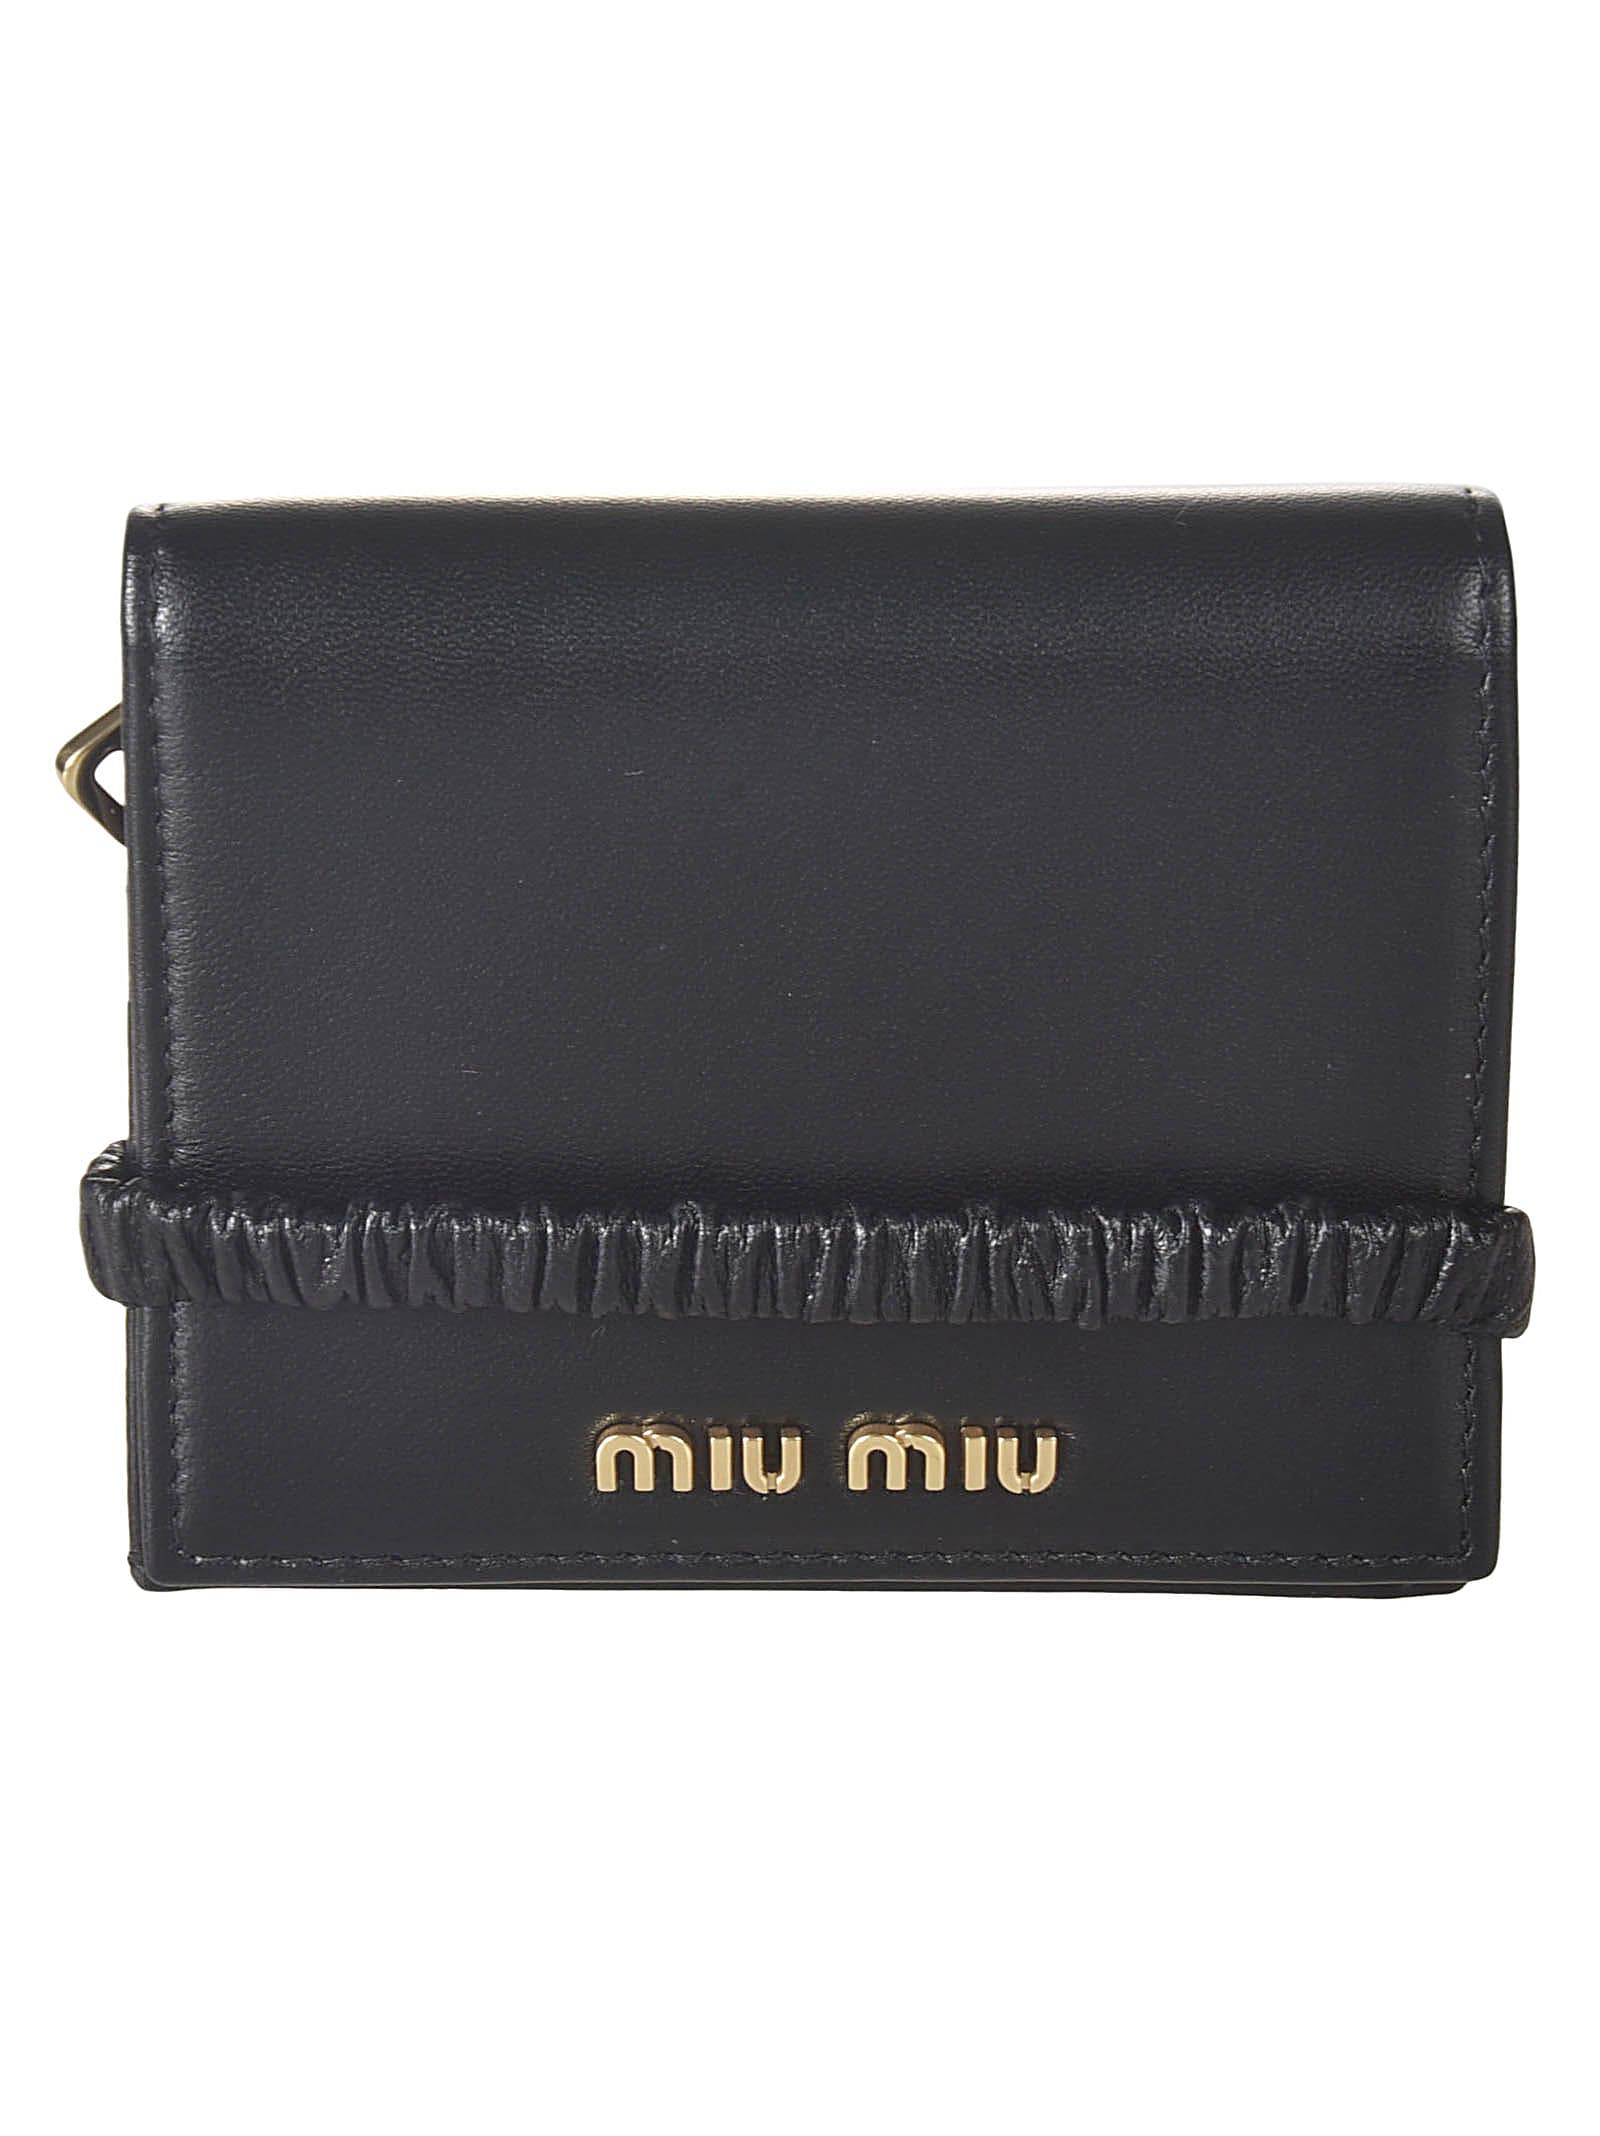 Miu Miu Metallic Foldover Wallet